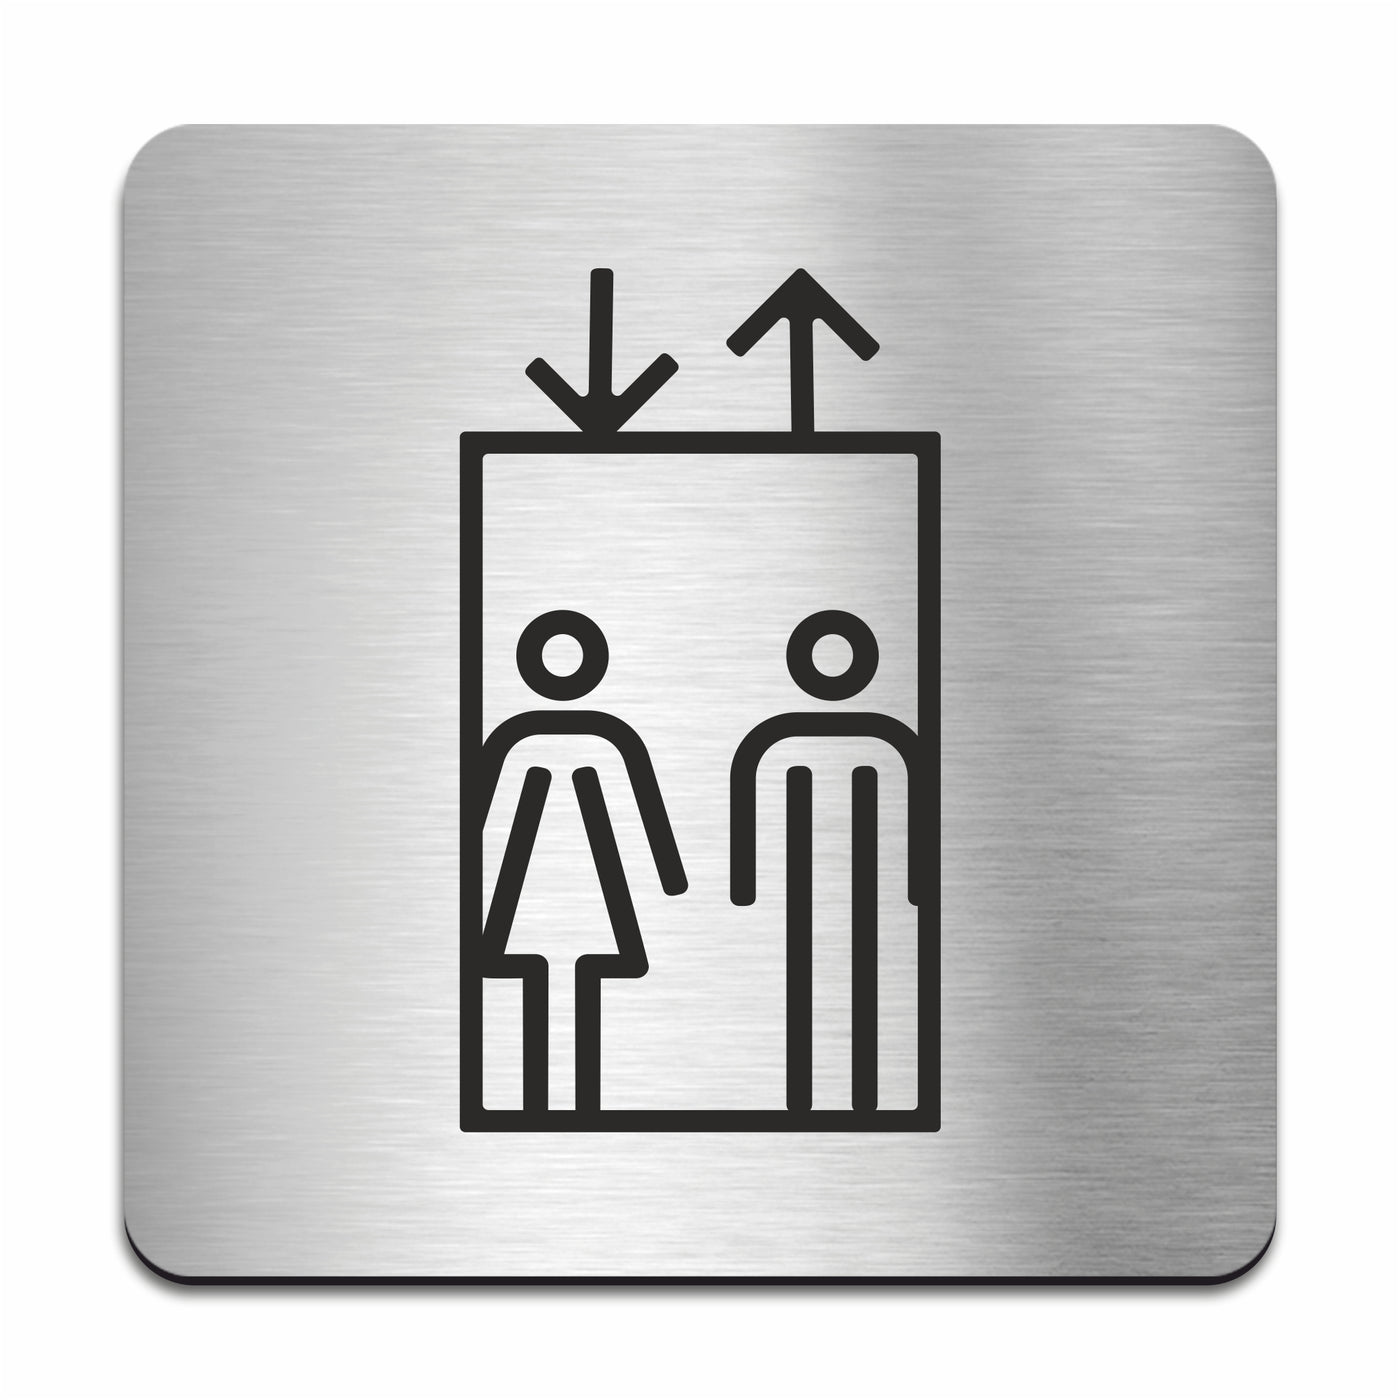 Metal Elevator Sign - Stainless steel